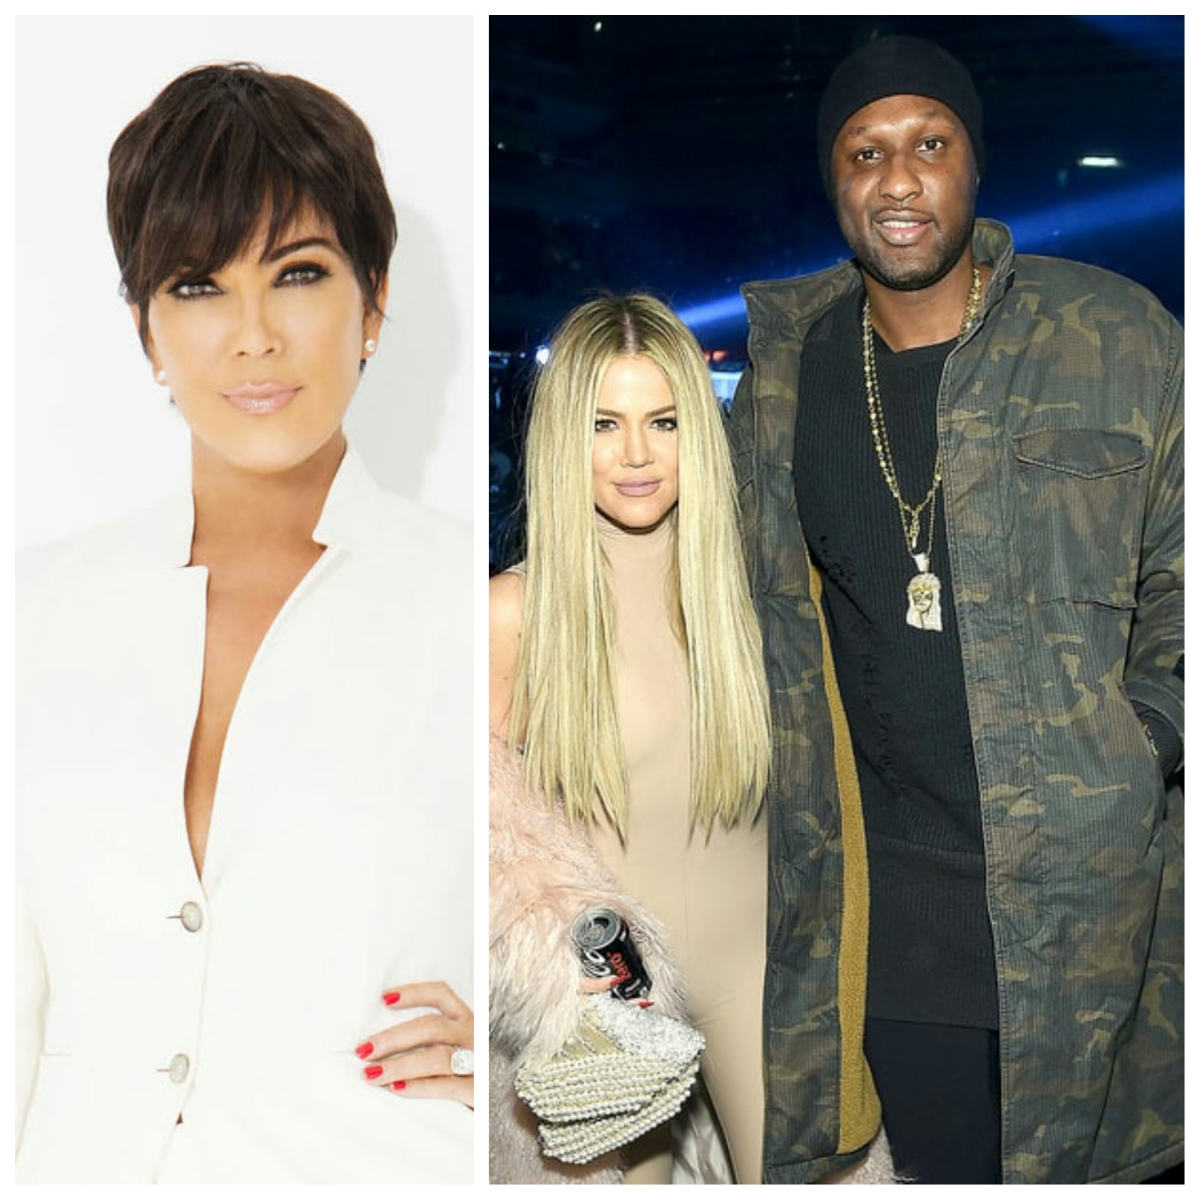 “In Kardashian News:” Kris Jenner (@krisjenner) Allegedly Fires Lamar Odom (@LamarOdom) from “Keeping Up With The Kardashians!”